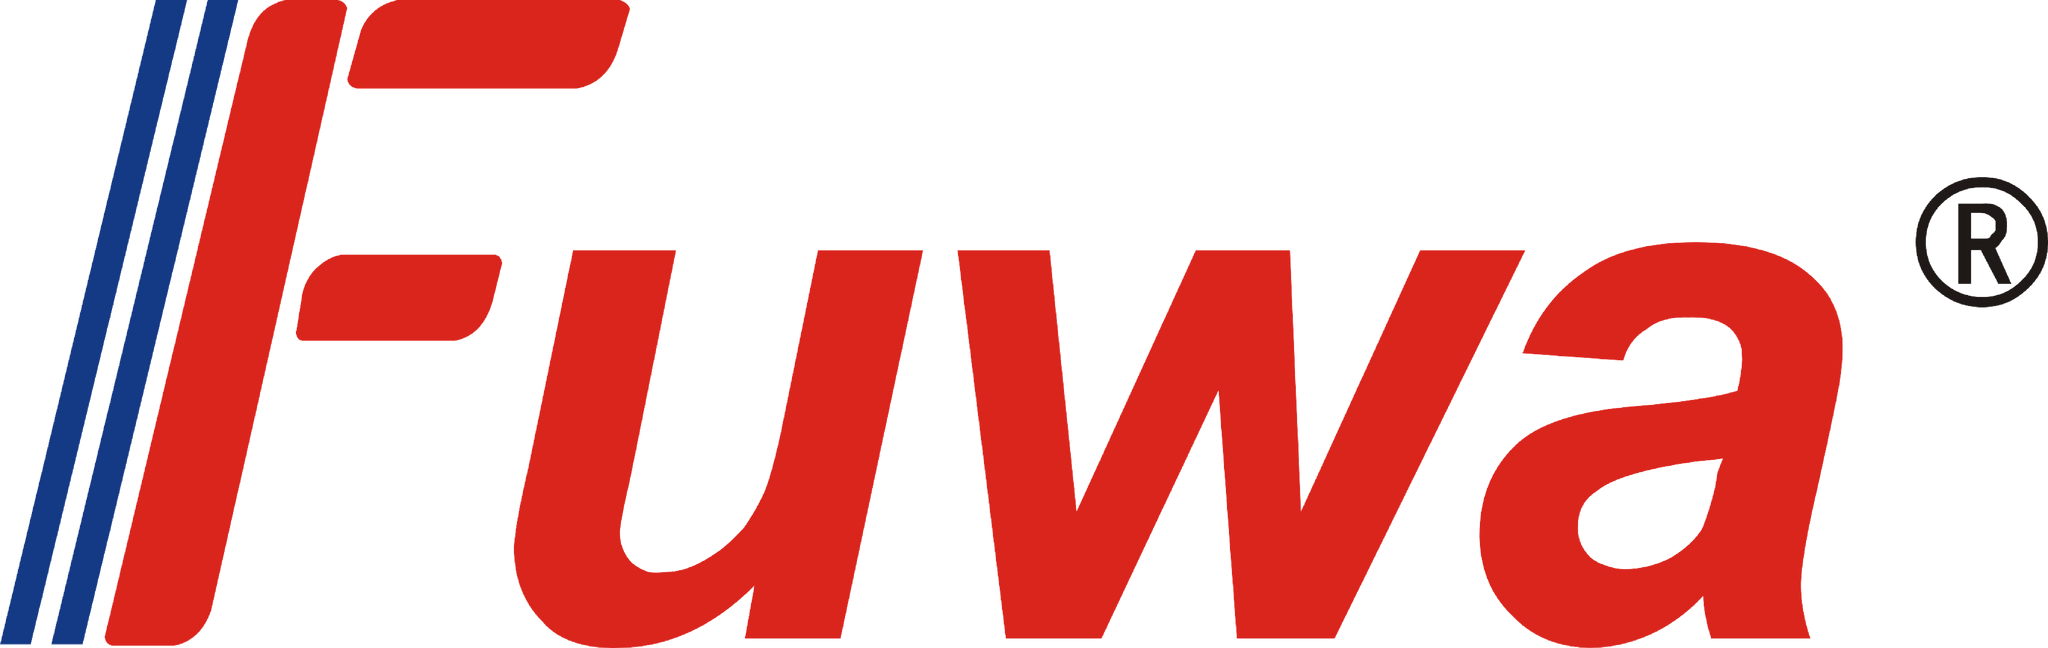 Fuwa Logo - Guangdong FUWA Equipment Manufacturing Co Ltd - Intermodal Europe 2018